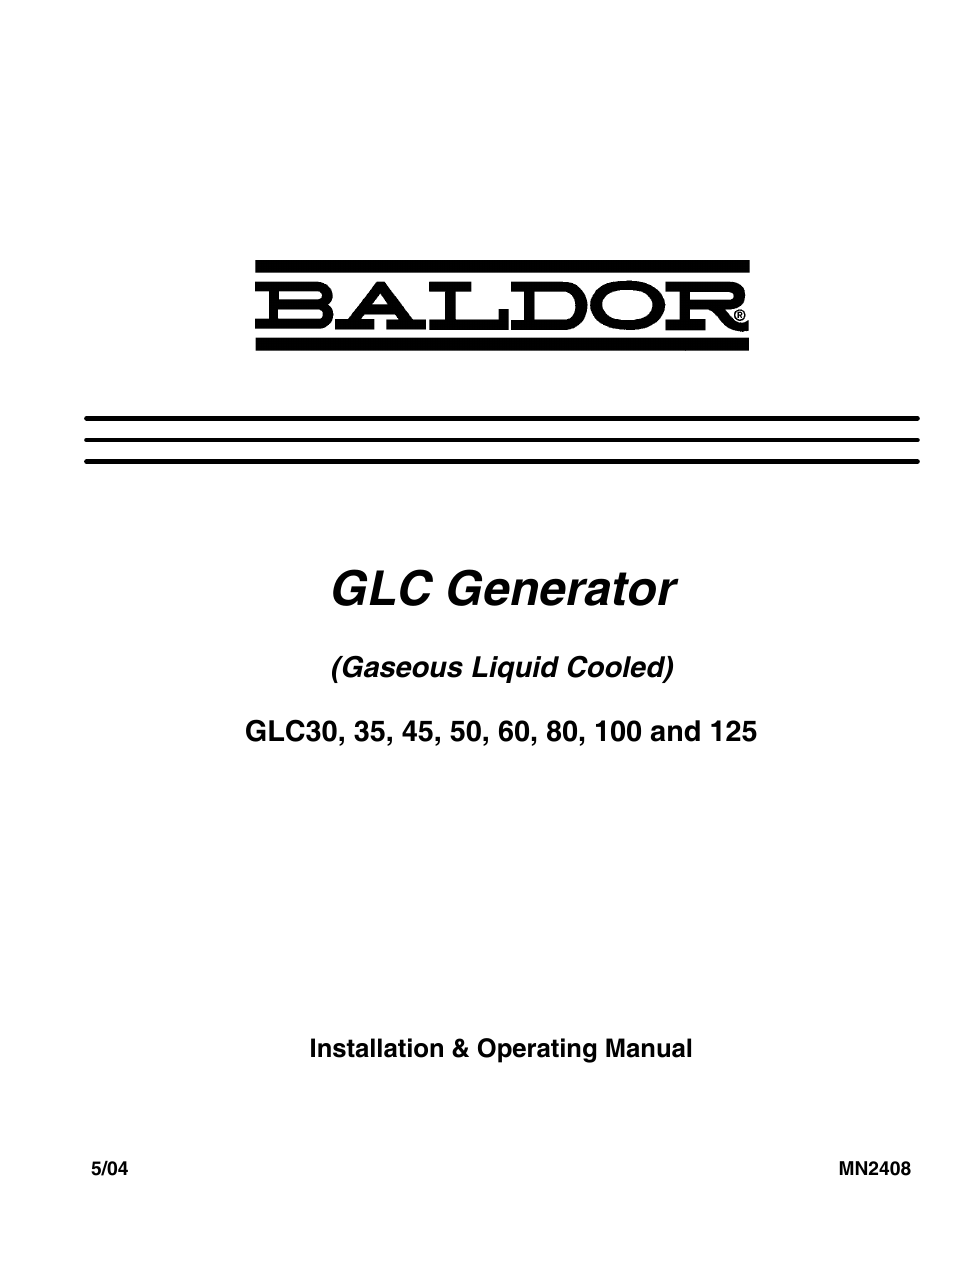 GLC GENERATOR GLC50